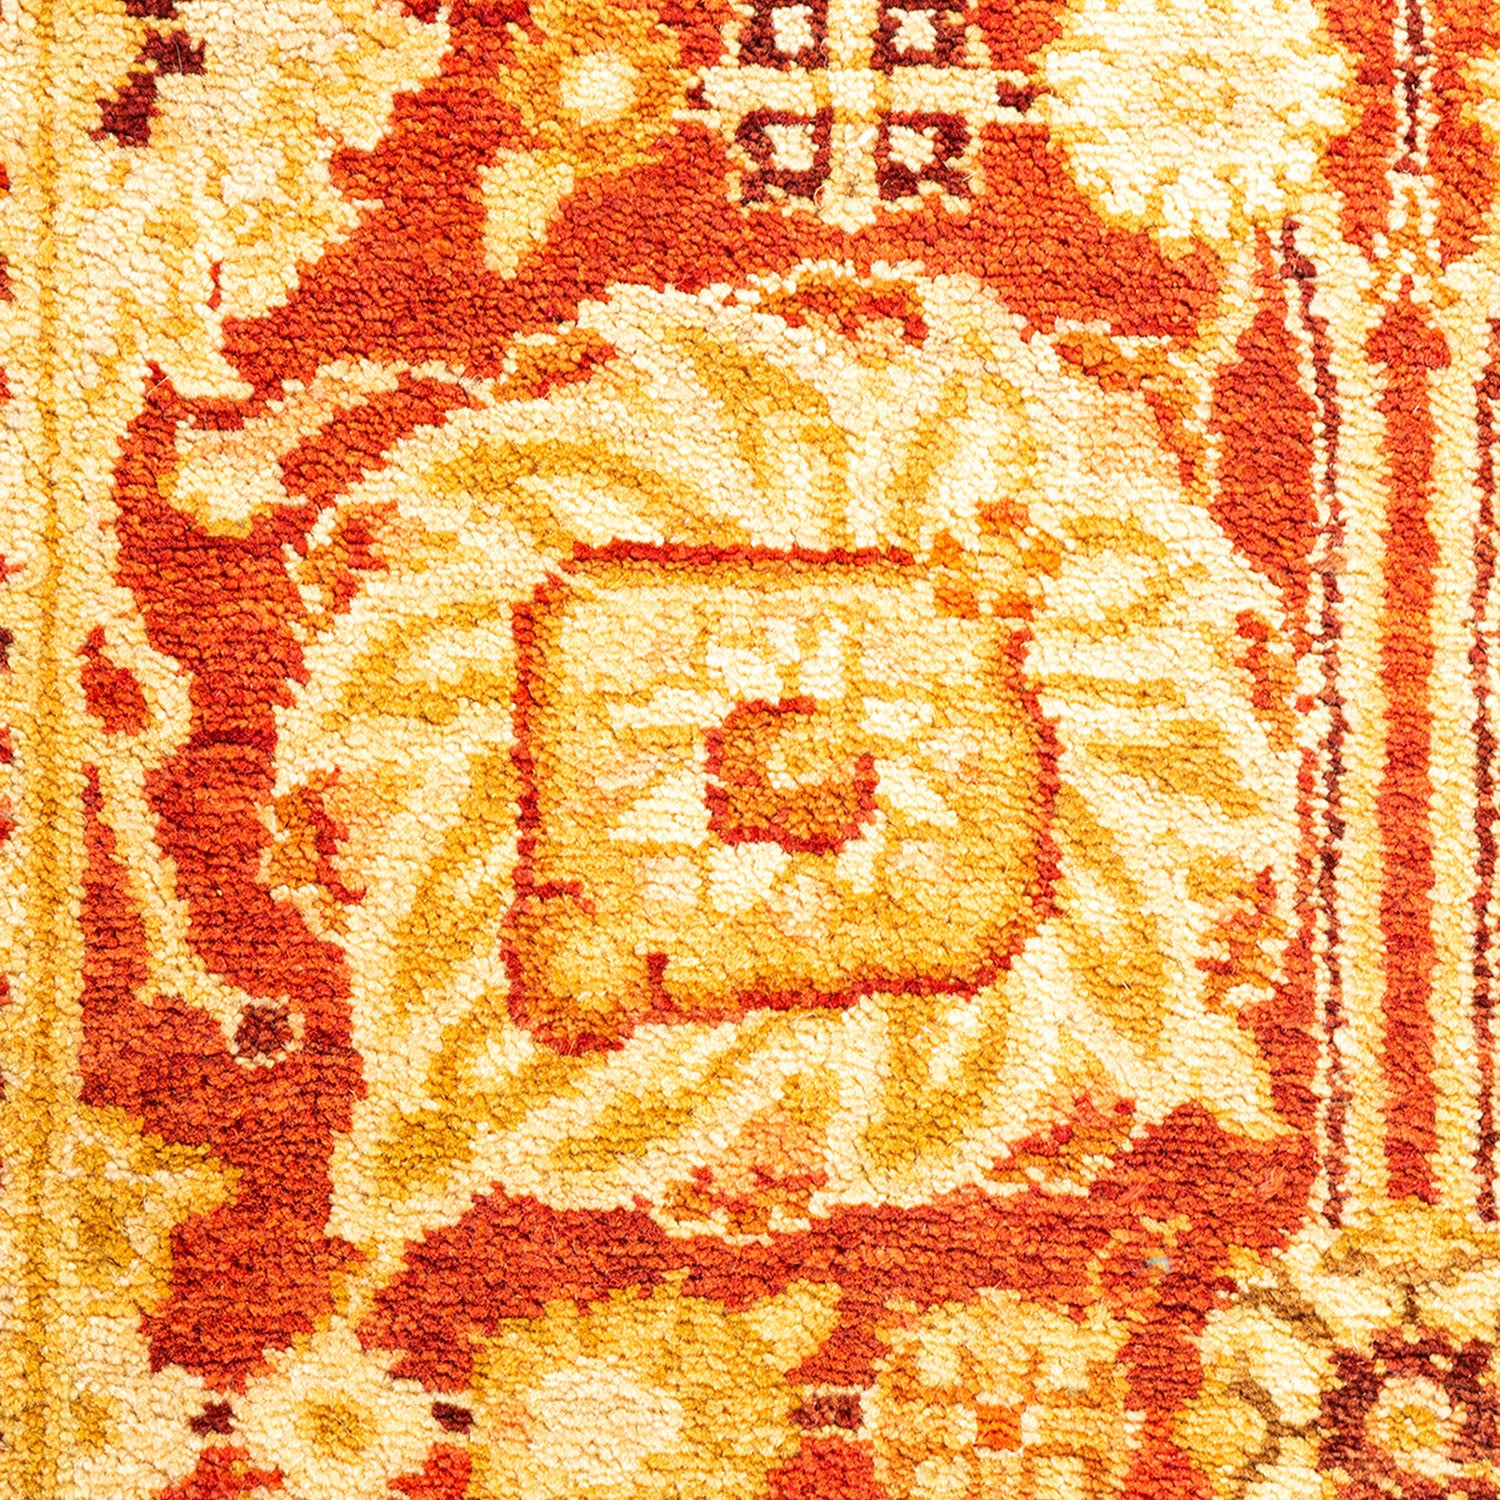 Intricate geometric and floral pattern on a plush orange carpet.